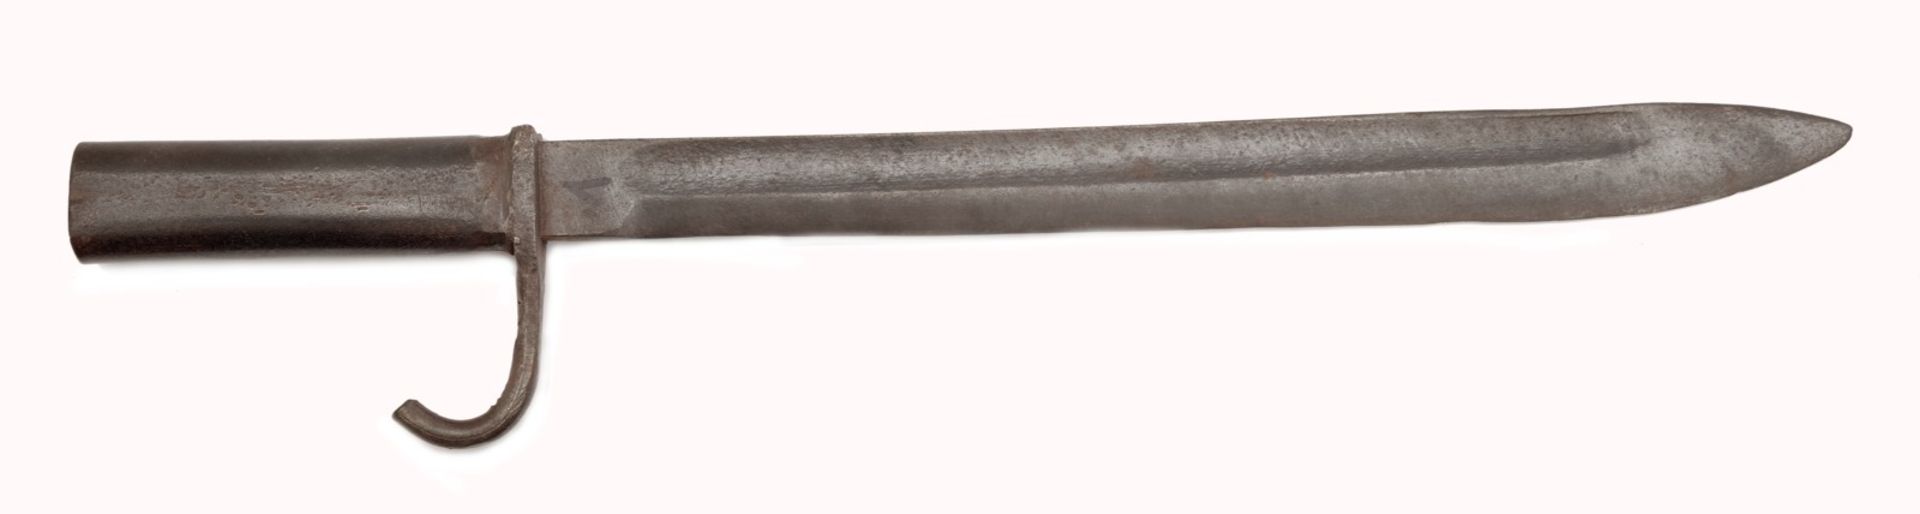 Ersatz bayonet